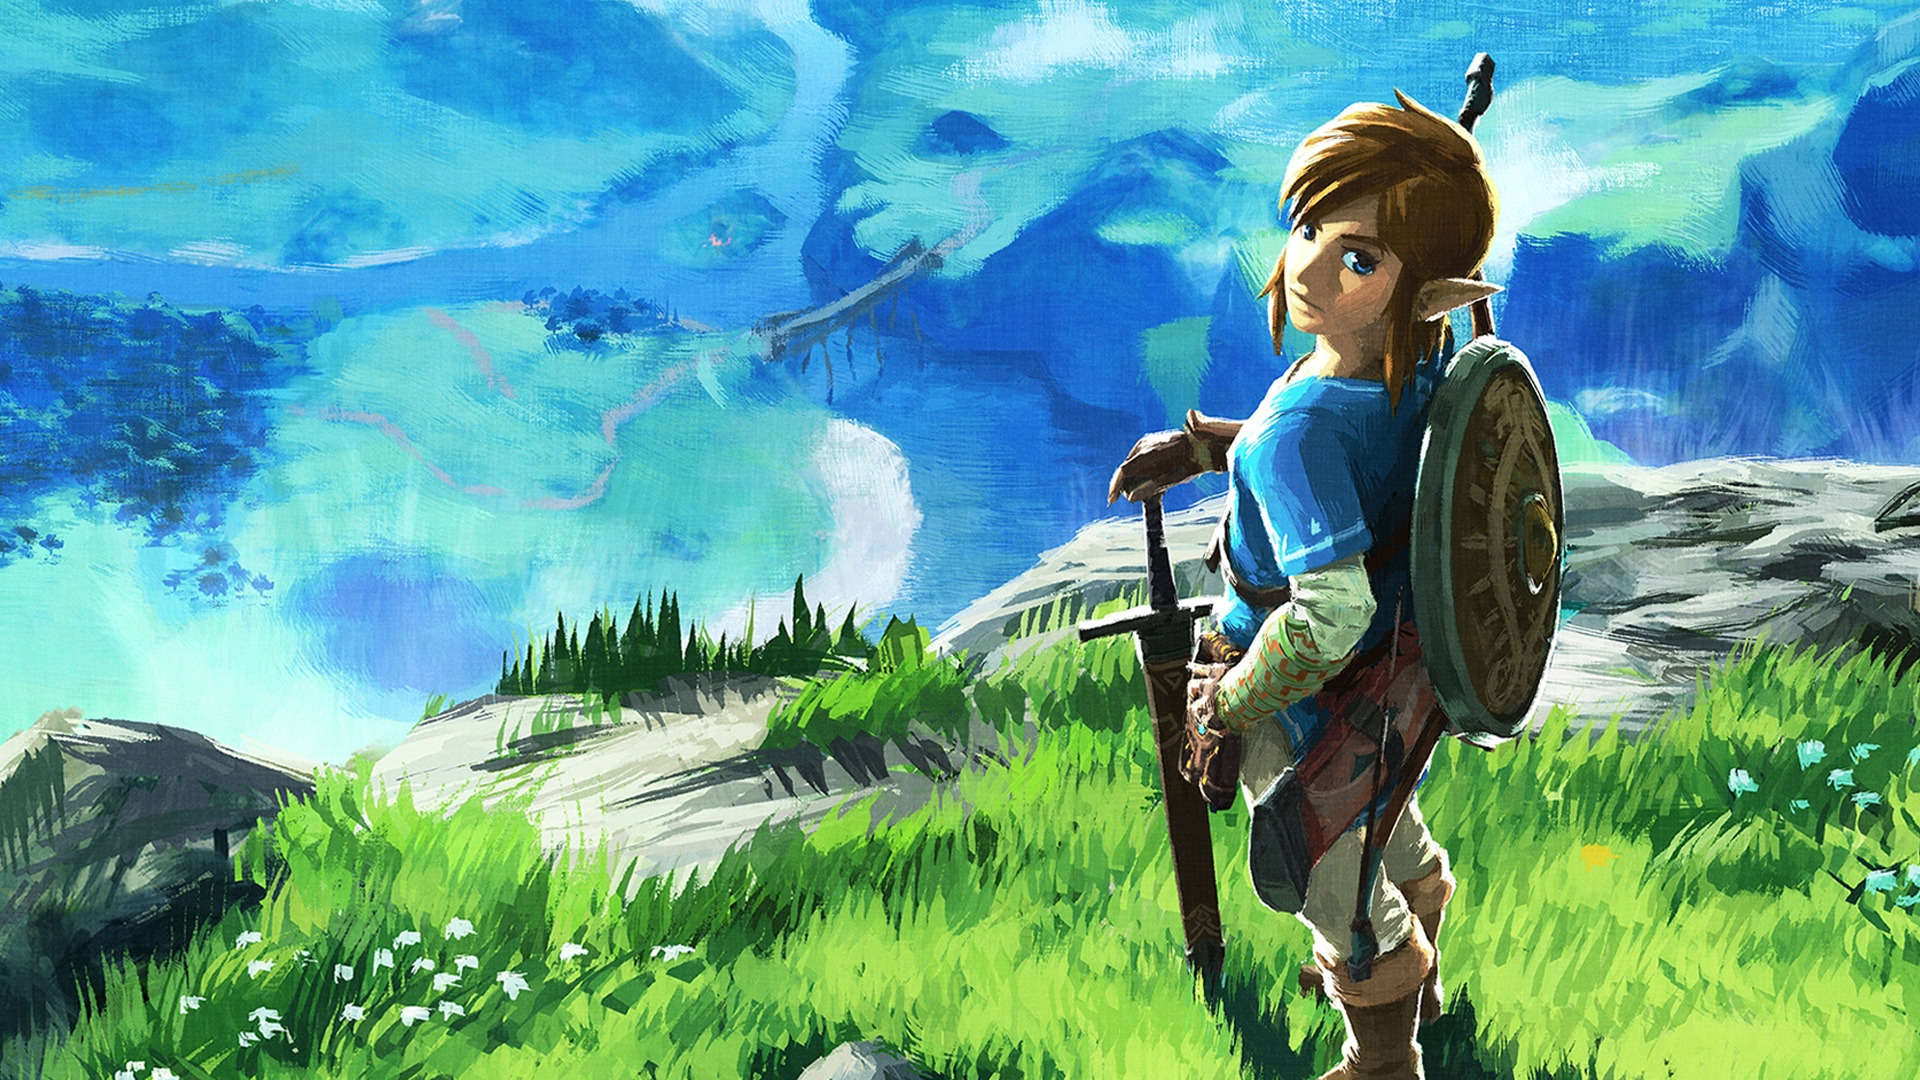 Zelda: Breath of the Wild' Is My New Favorite Multiplayer Game